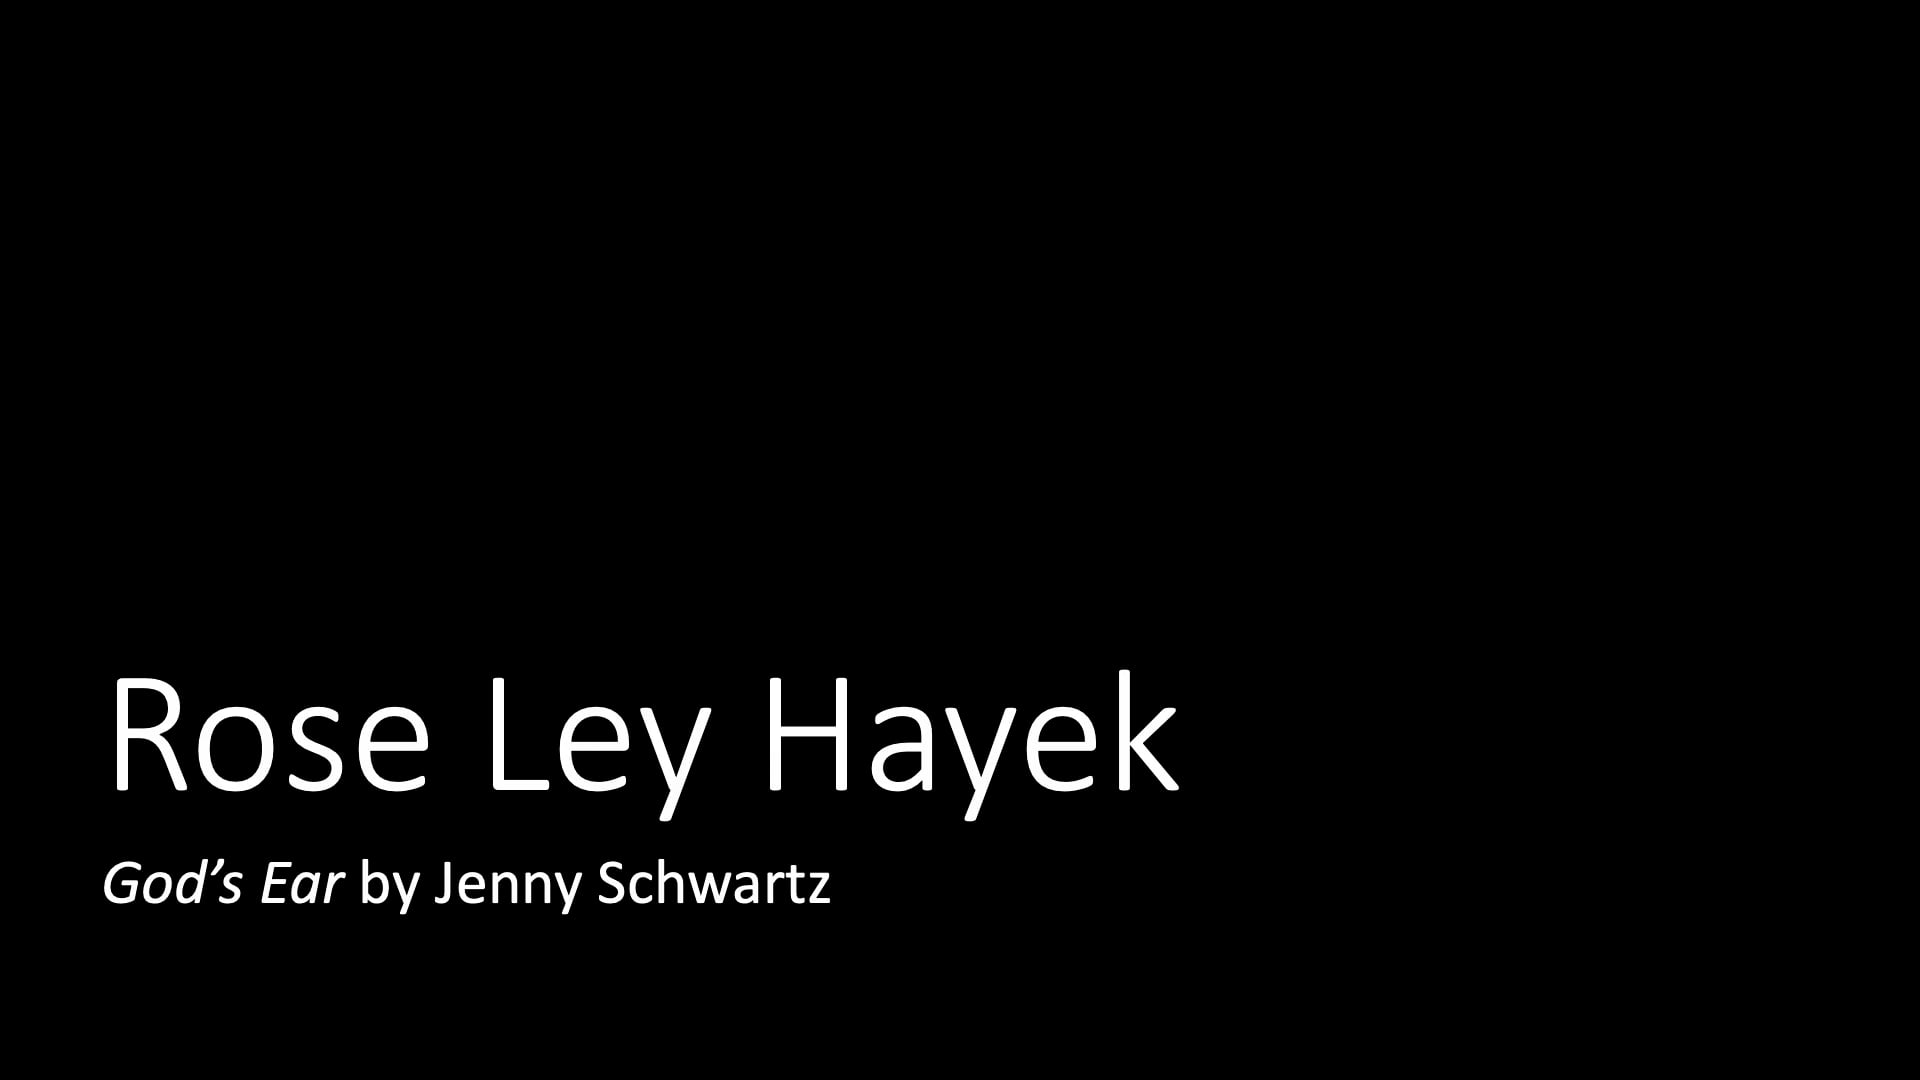 Rose Ley Hayek: God's Ear